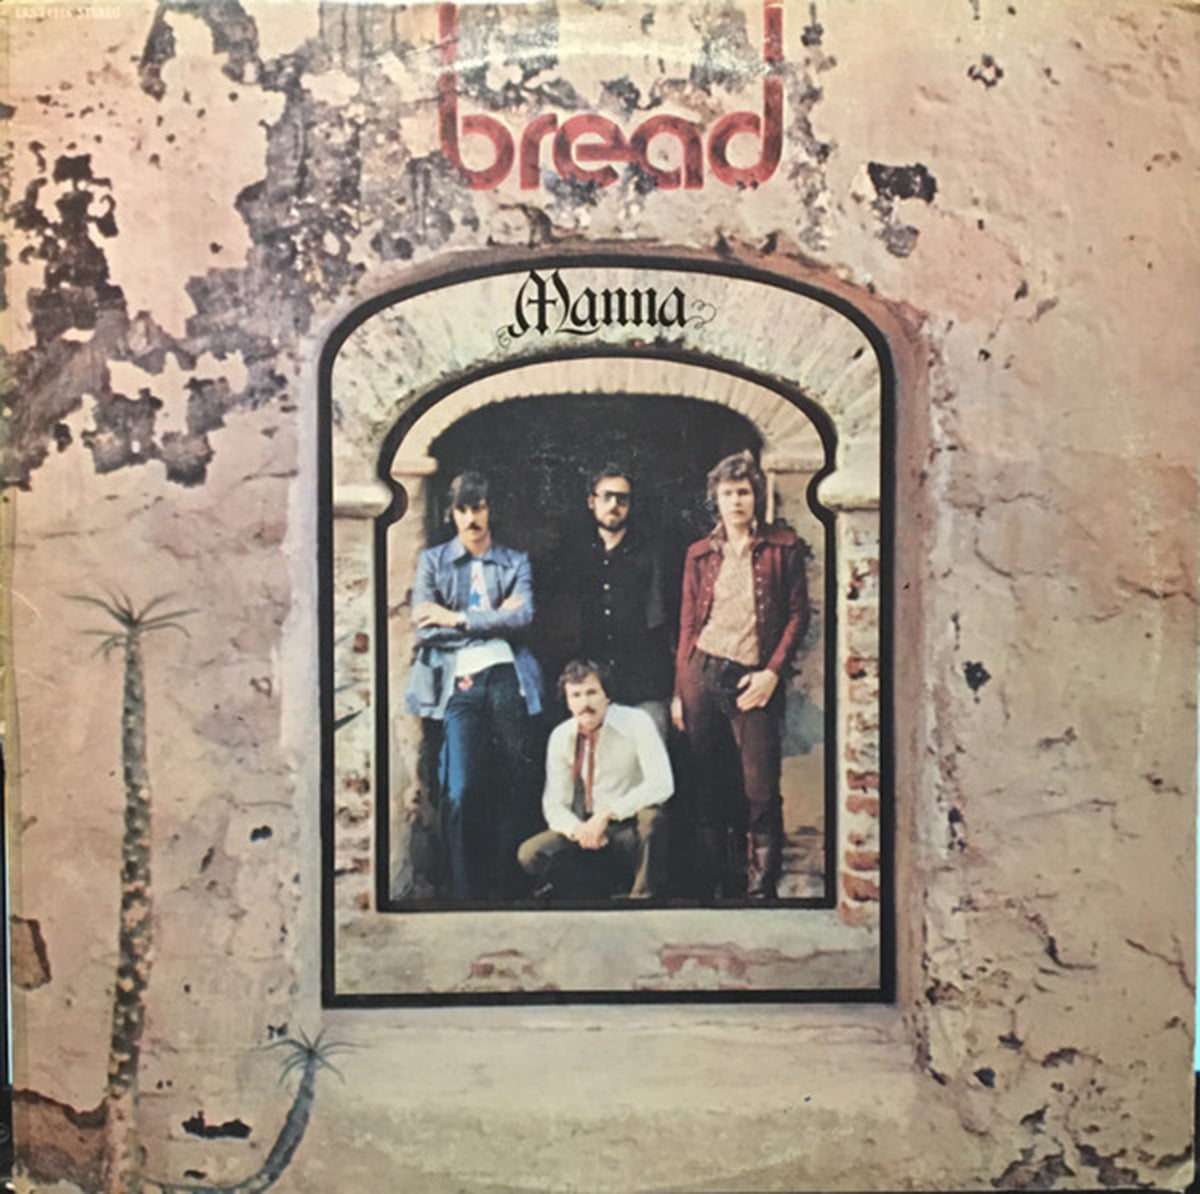 Bread – Manna - 1971